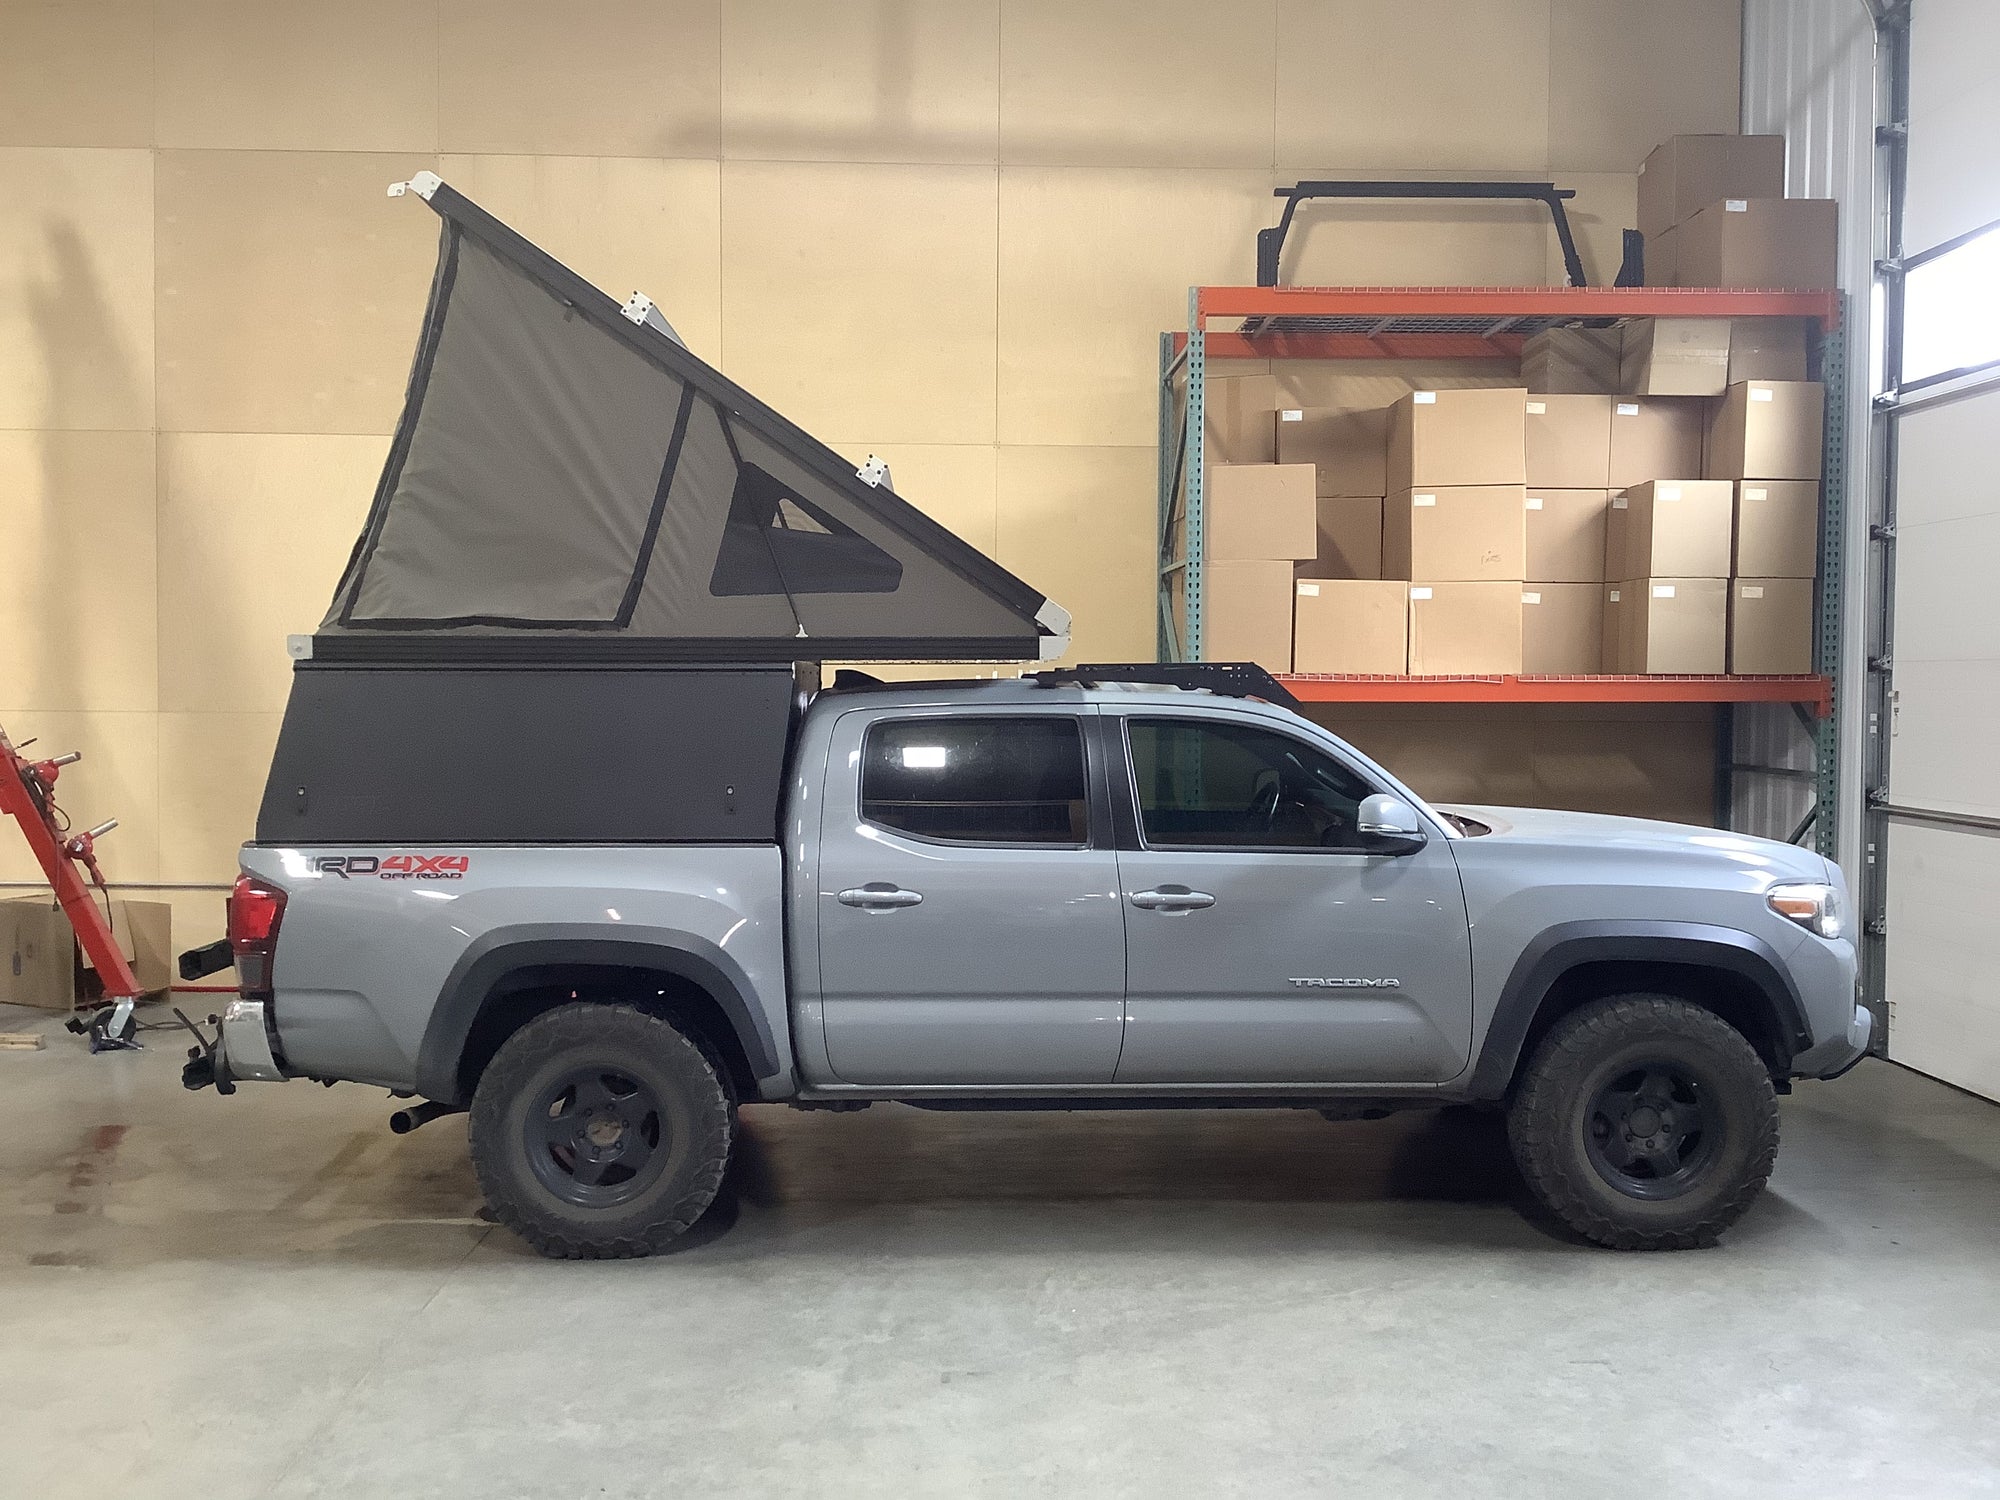 2018 Toyota Tacoma Camper - Build #3395